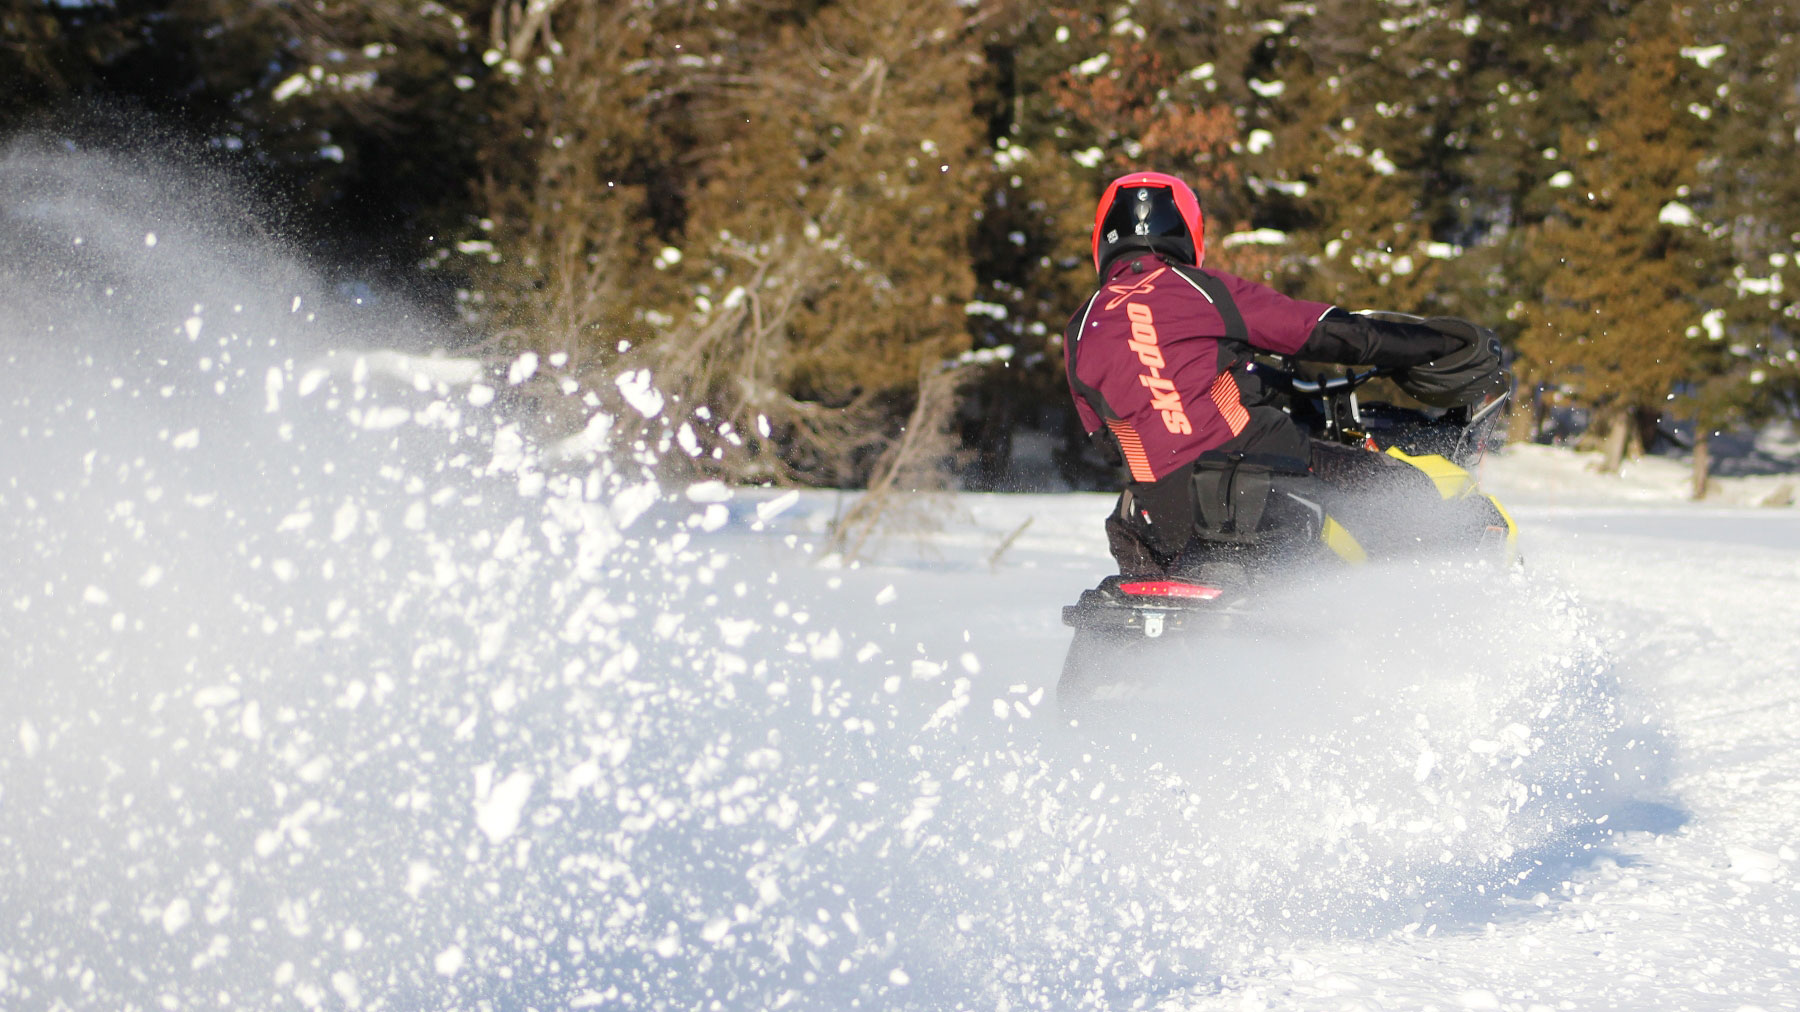 Ski-Doo Ambassador MJ Thompson riding a snowmobile